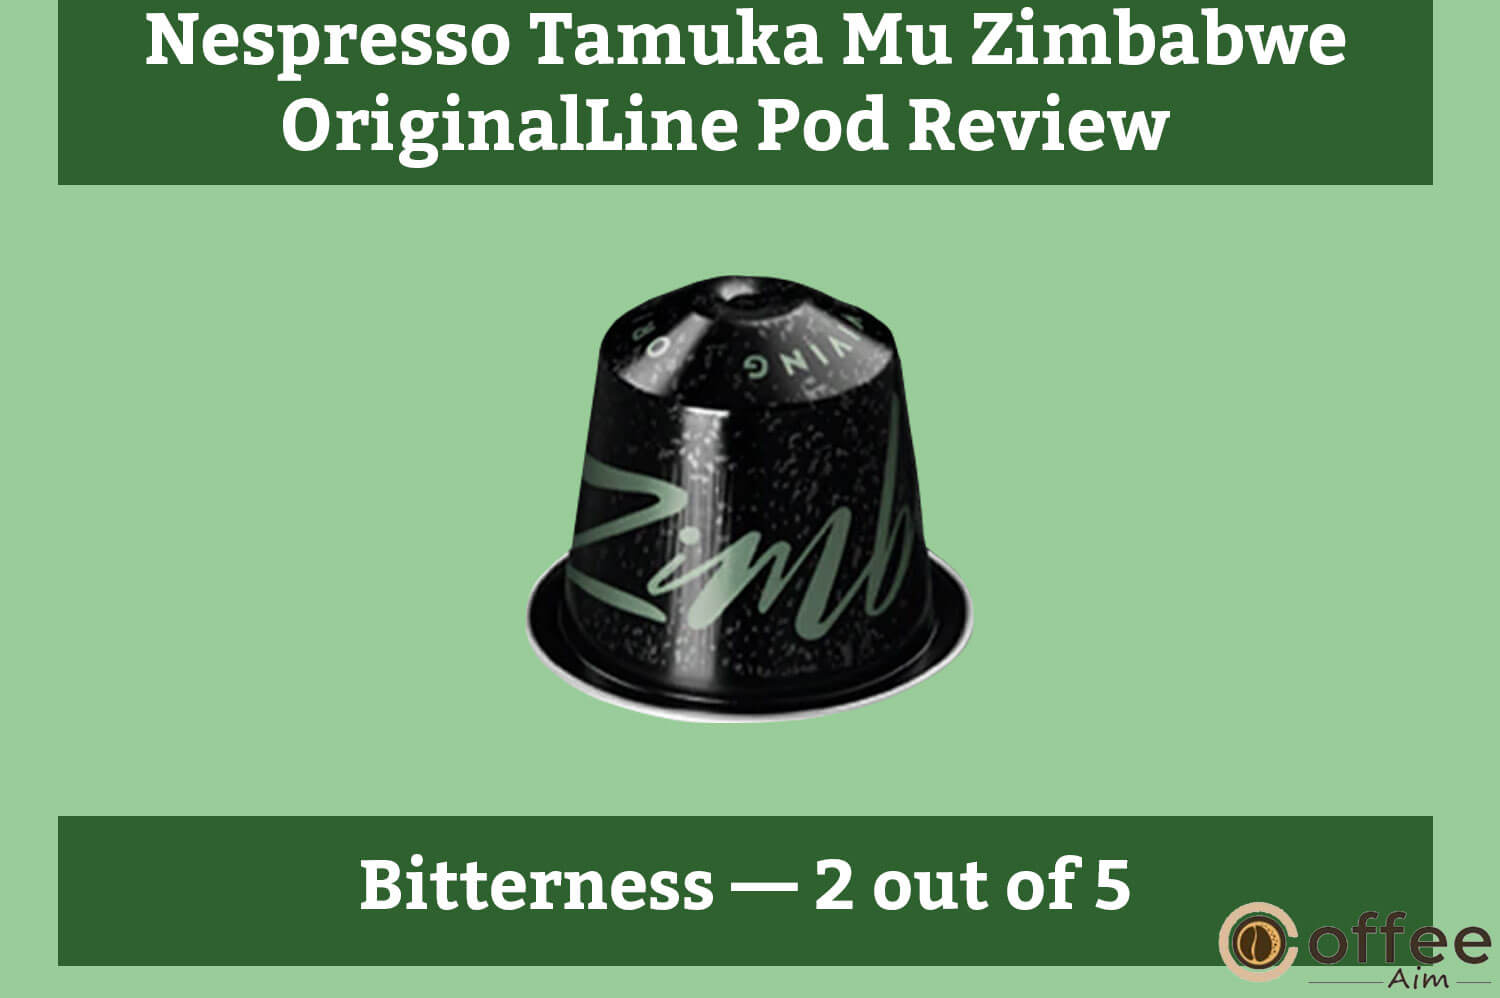 The image depicts 'Bitterness' for "Nespresso Tamuka Mu Zimbabwe OriginalLine Pod," a focal point in the article "Nespresso Tamuka Mu Zimbabwe OriginalLine Pod Review."